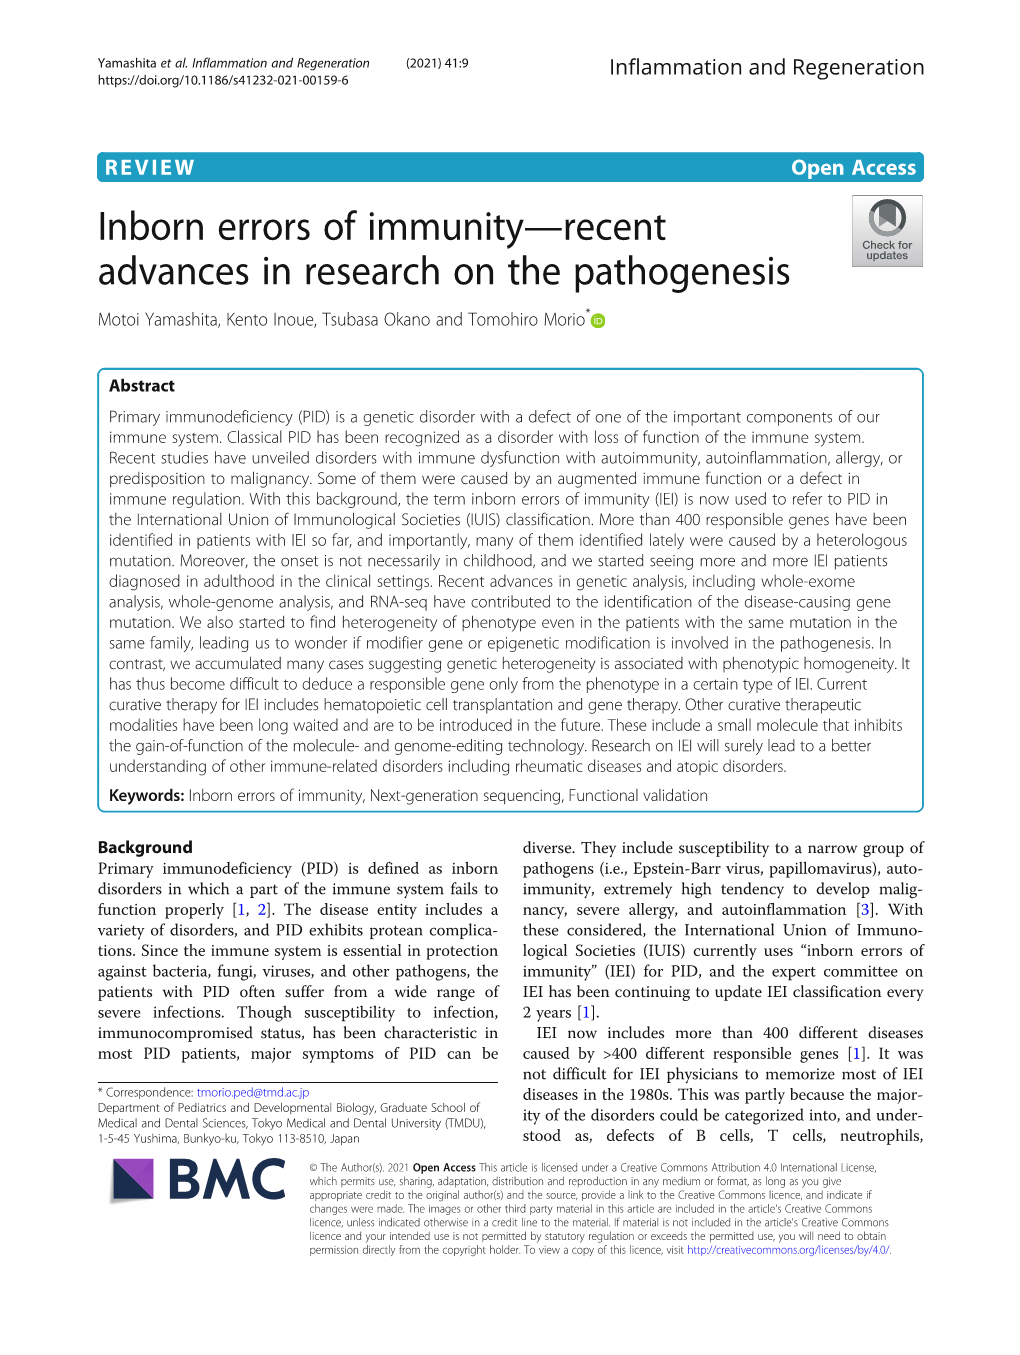 Inborn Errors of Immunity—Recent Advances in Research on the Pathogenesis Motoi Yamashita, Kento Inoue, Tsubasa Okano and Tomohiro Morio*